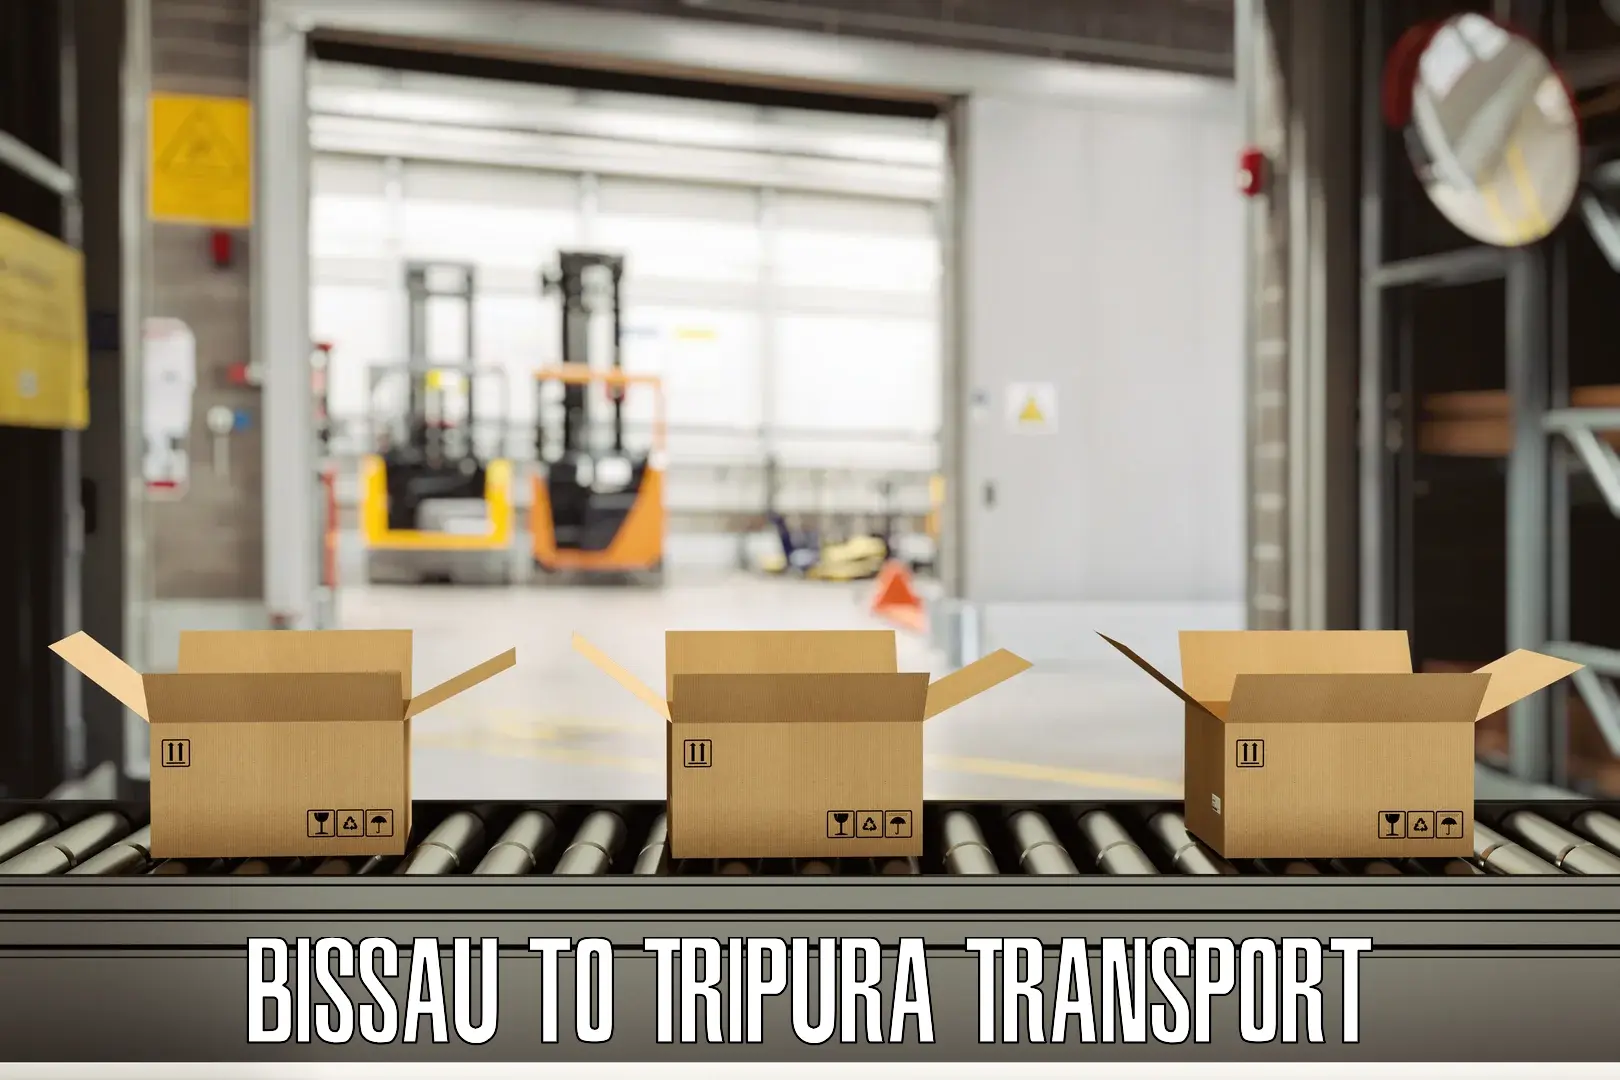 Transport in sharing in Bissau to West Tripura